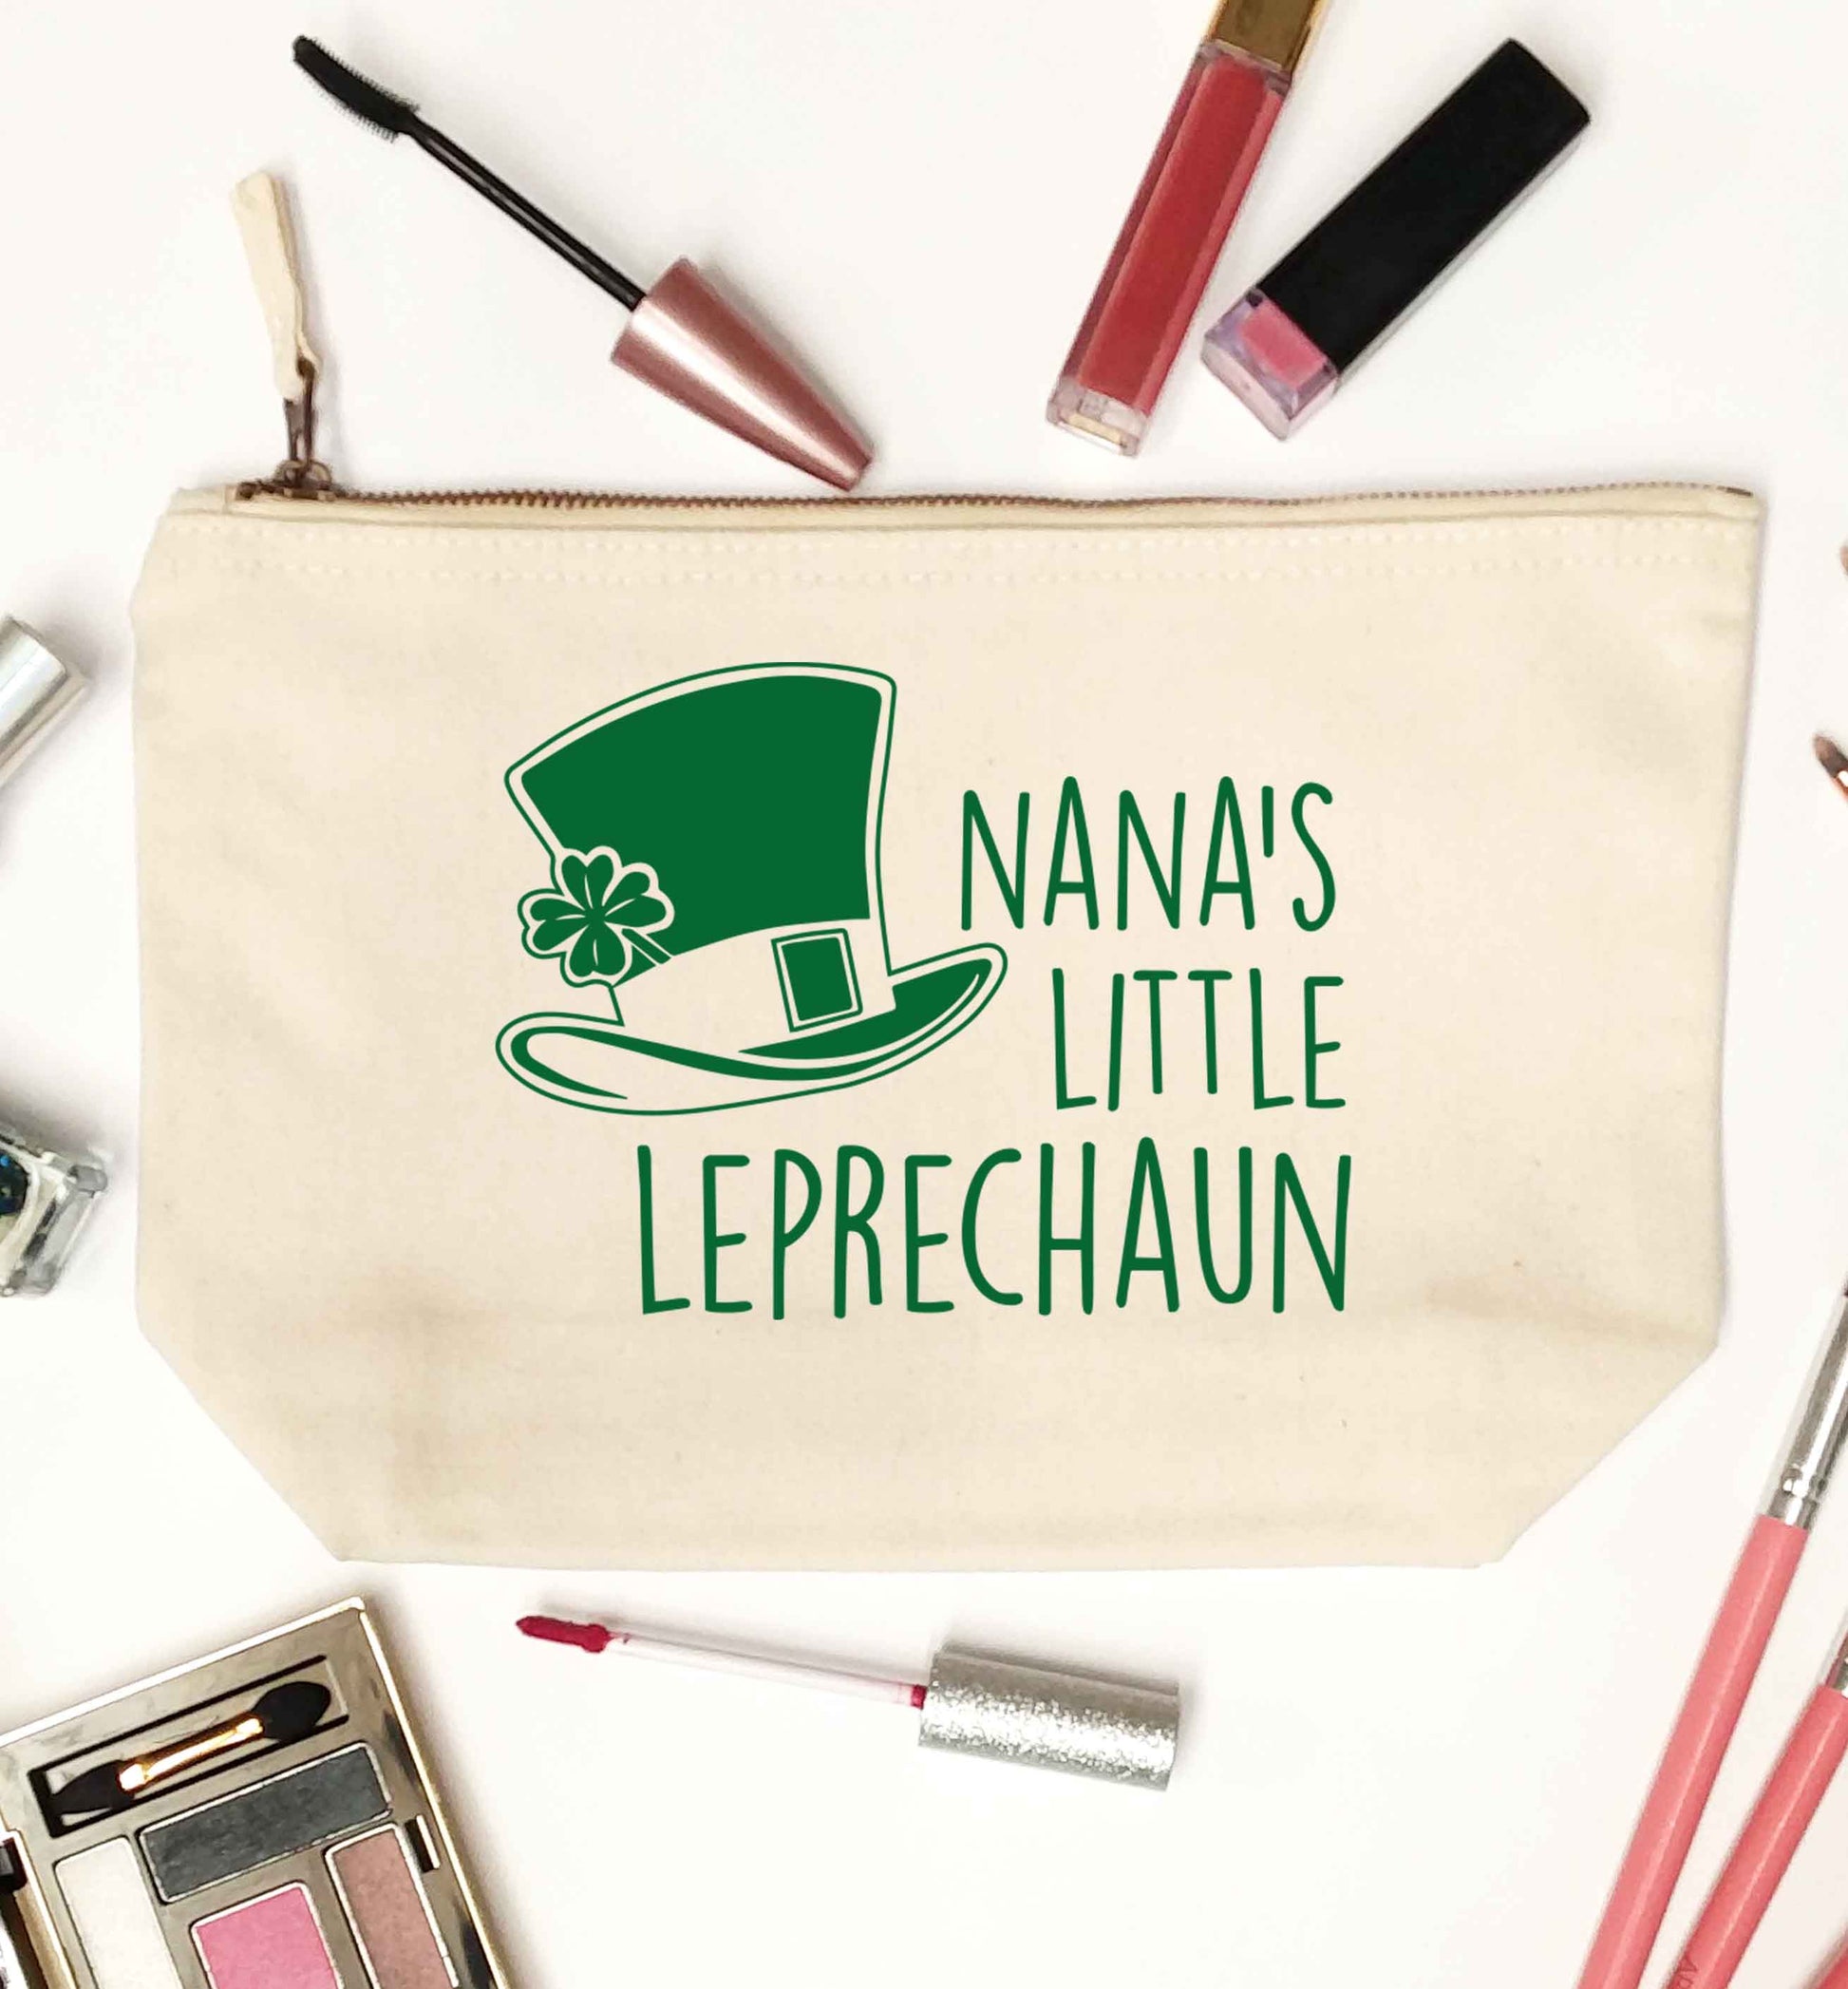 Nana's little leprechaun natural makeup bag